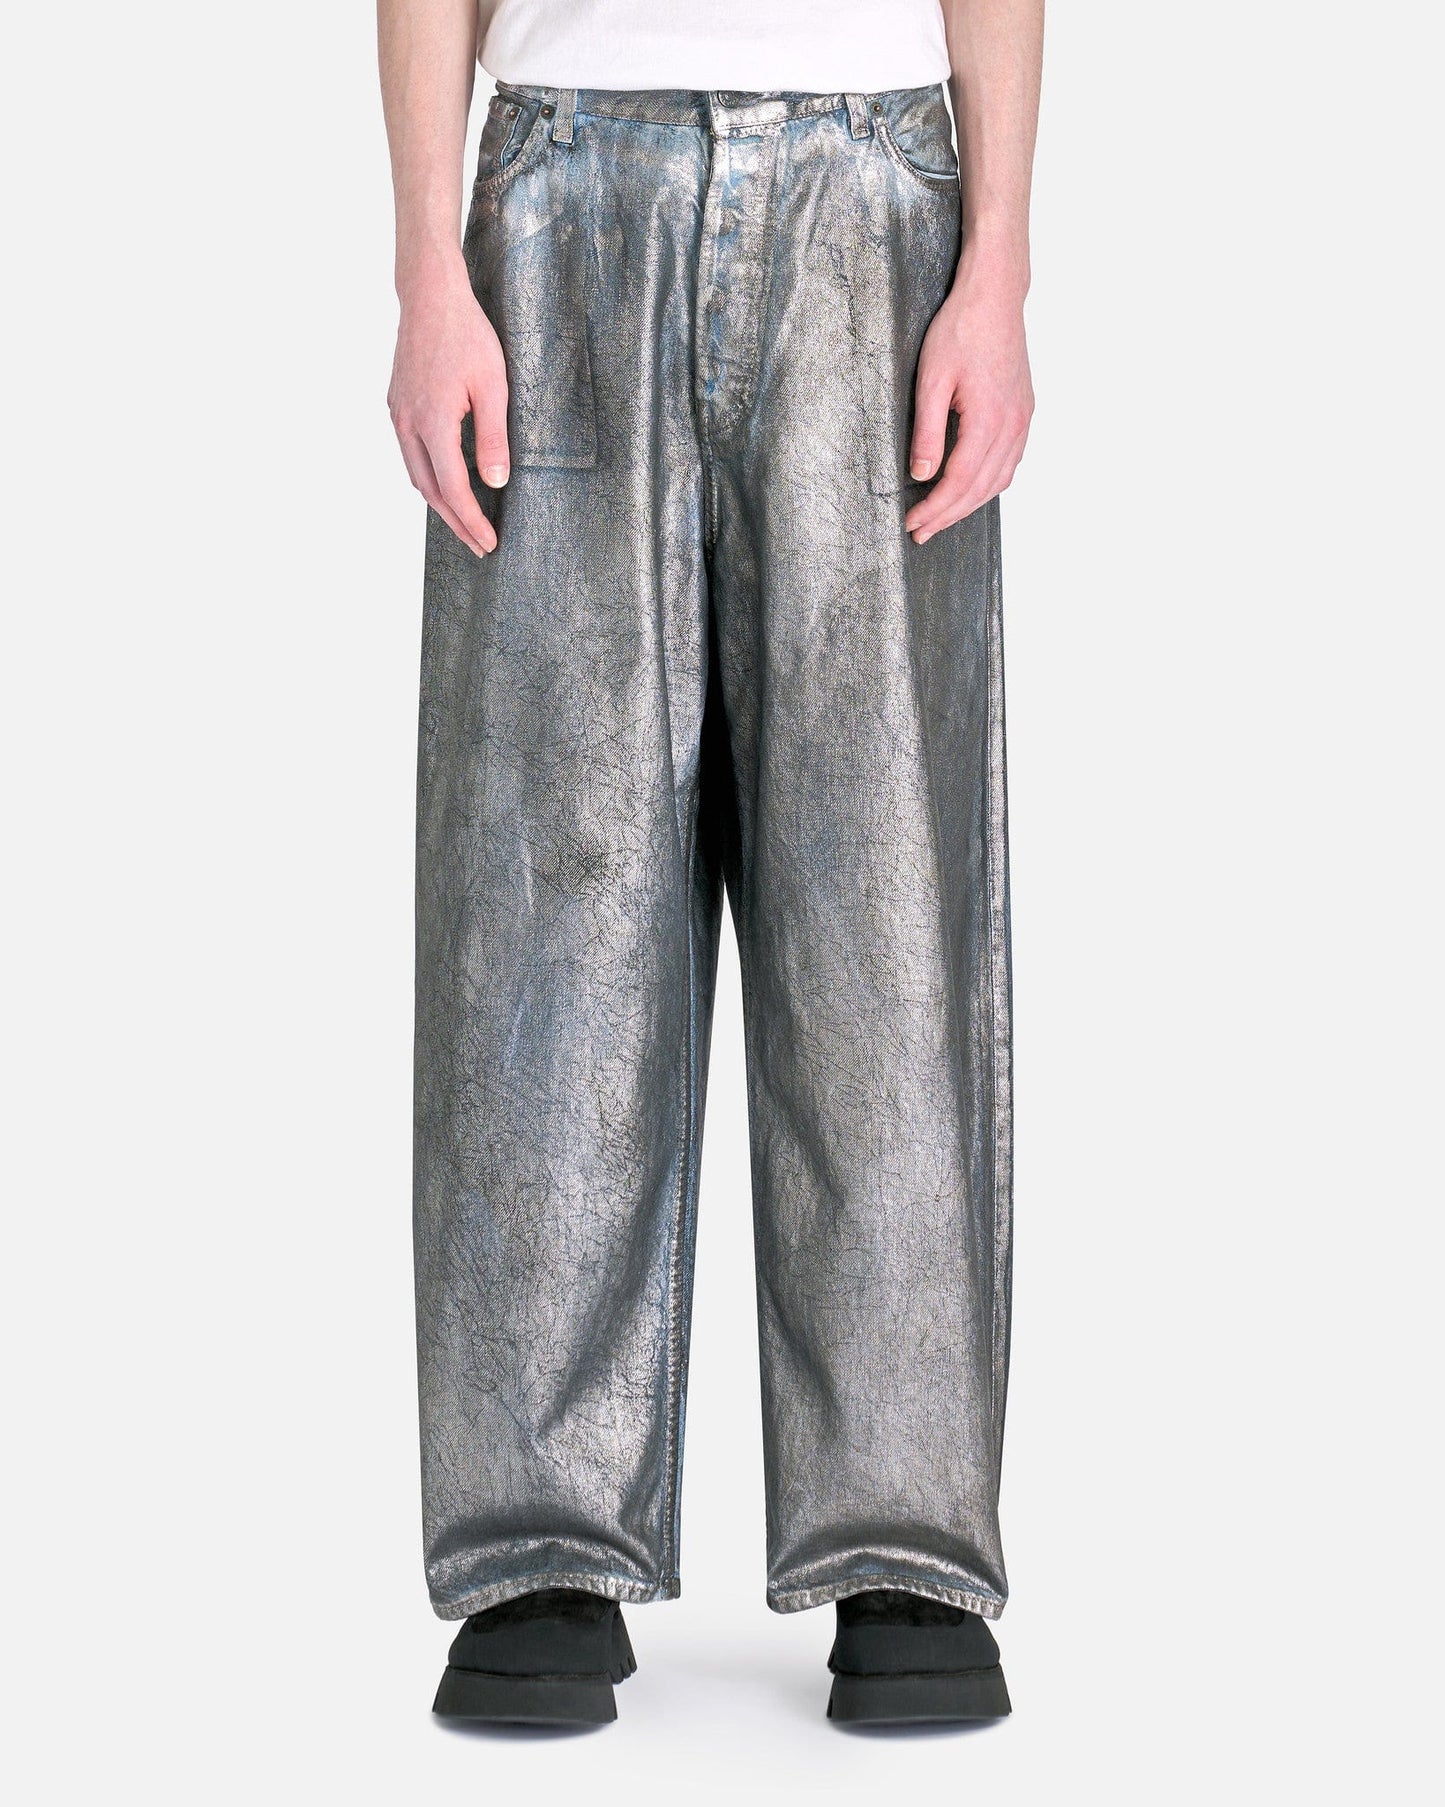 Acne Studios Men's Pants Trousers in Silver/Blue